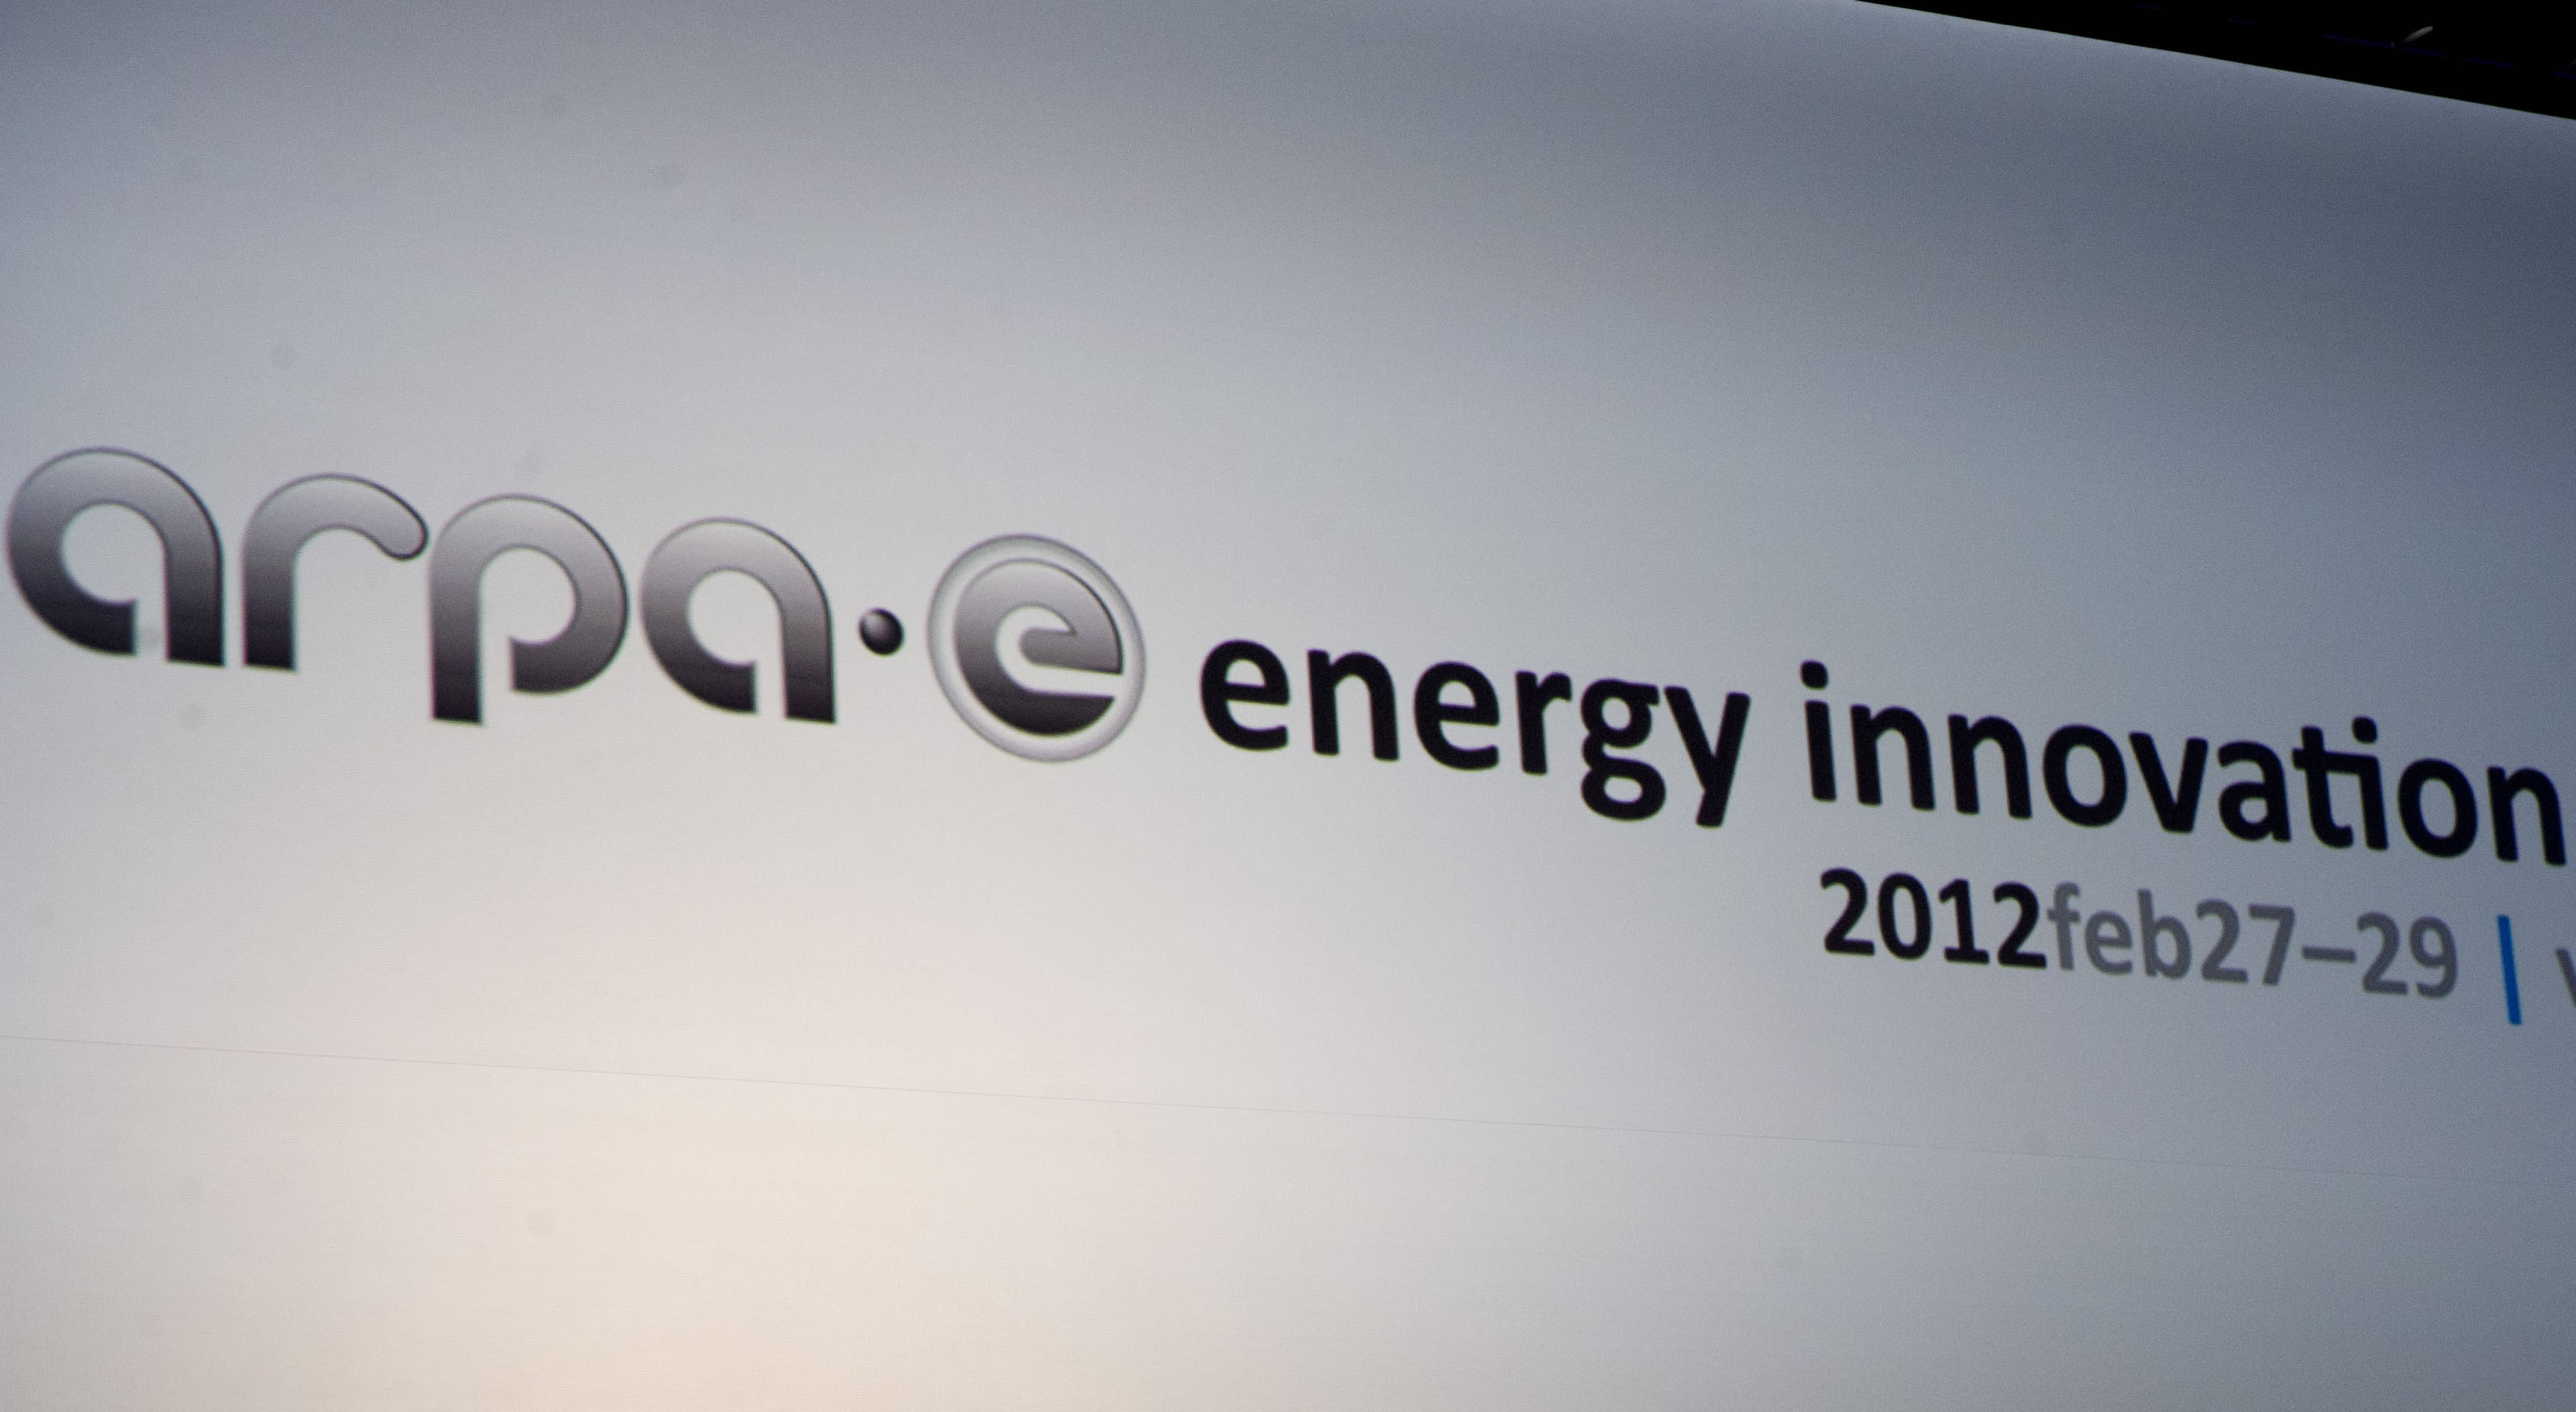 ARPA-E Energy Innovation Summit backdrop